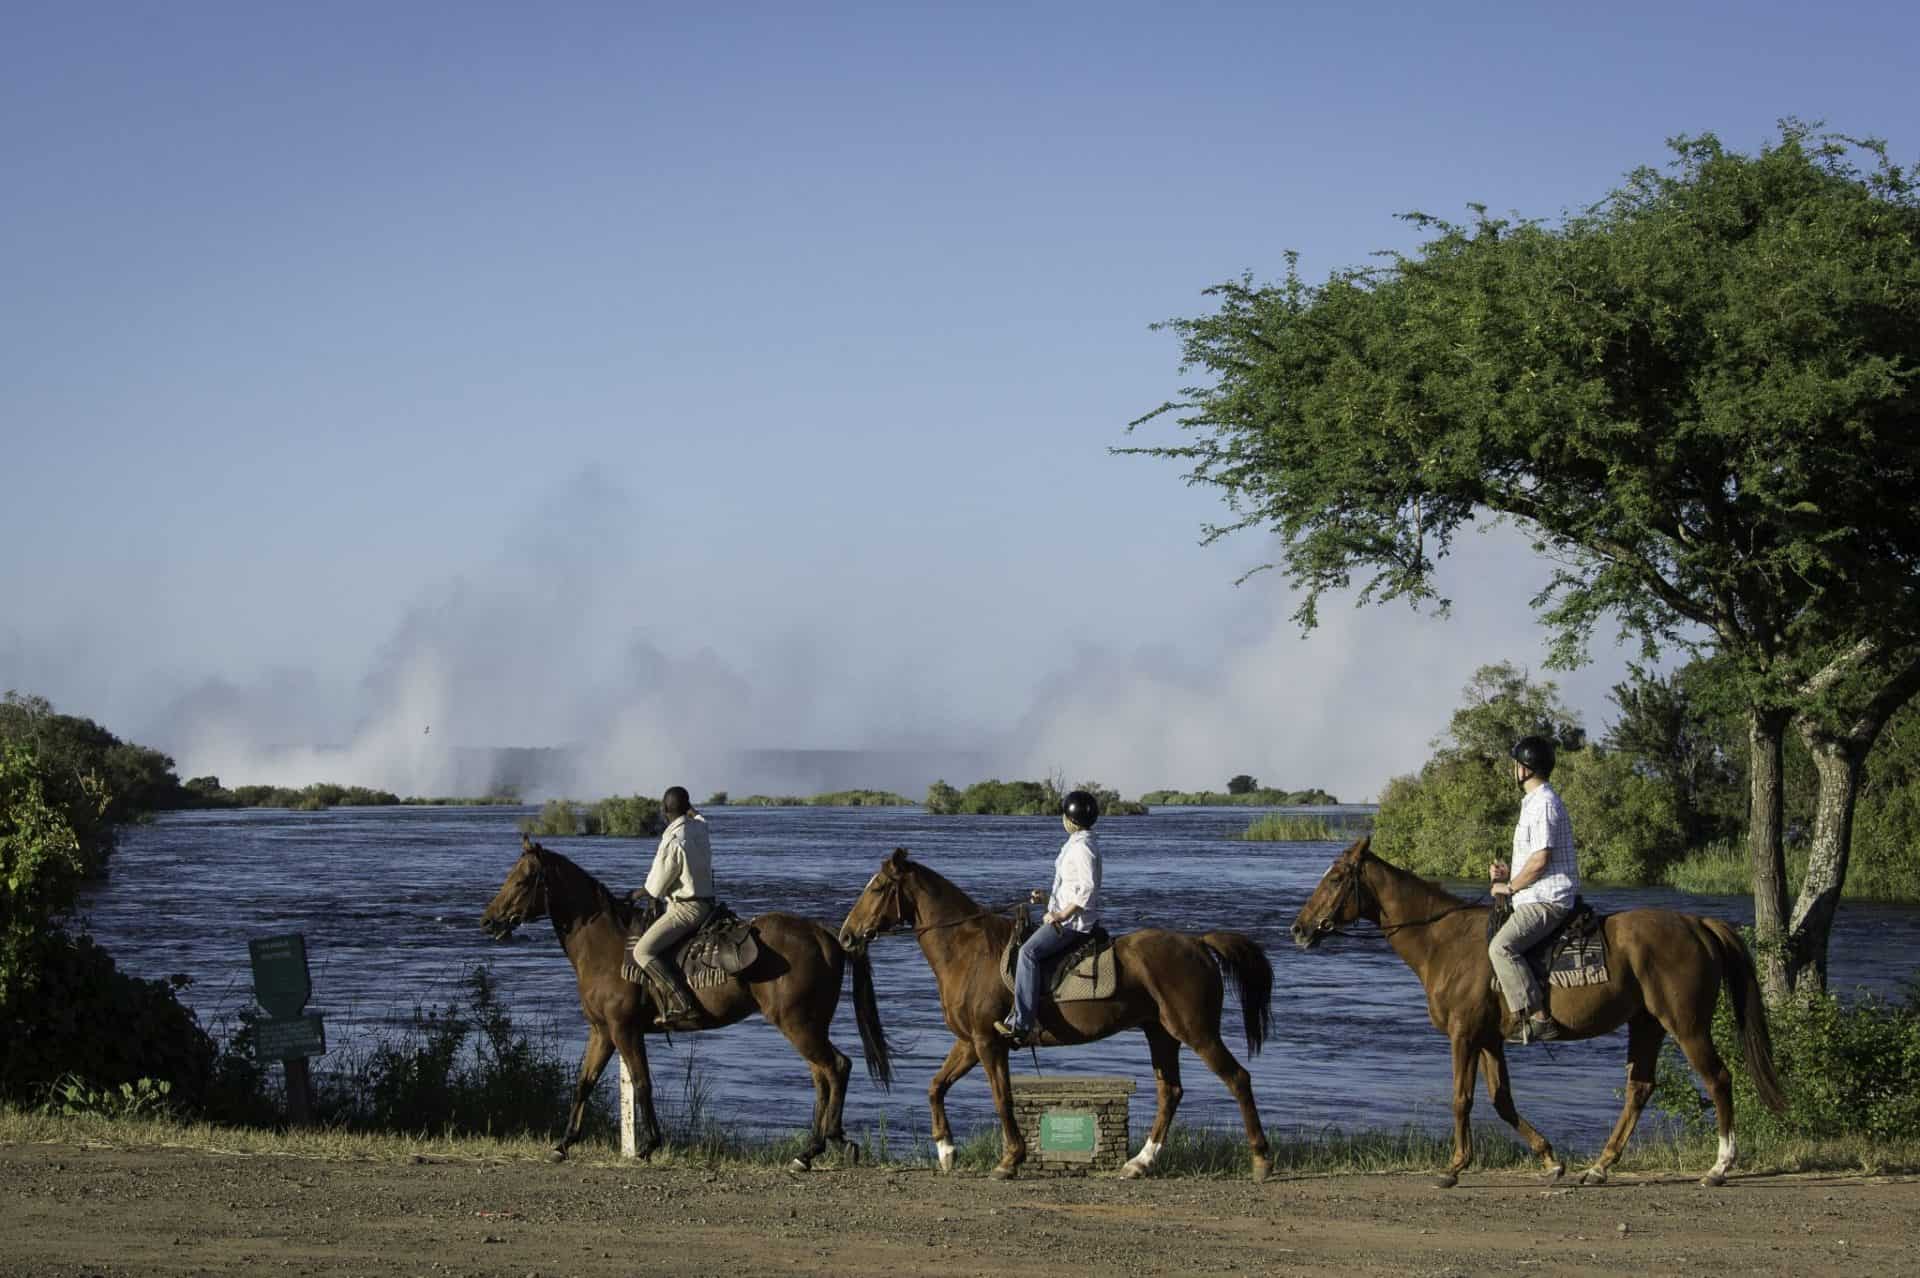 A horseback ride along the banks of the Zambezi River close to Victoria Falls